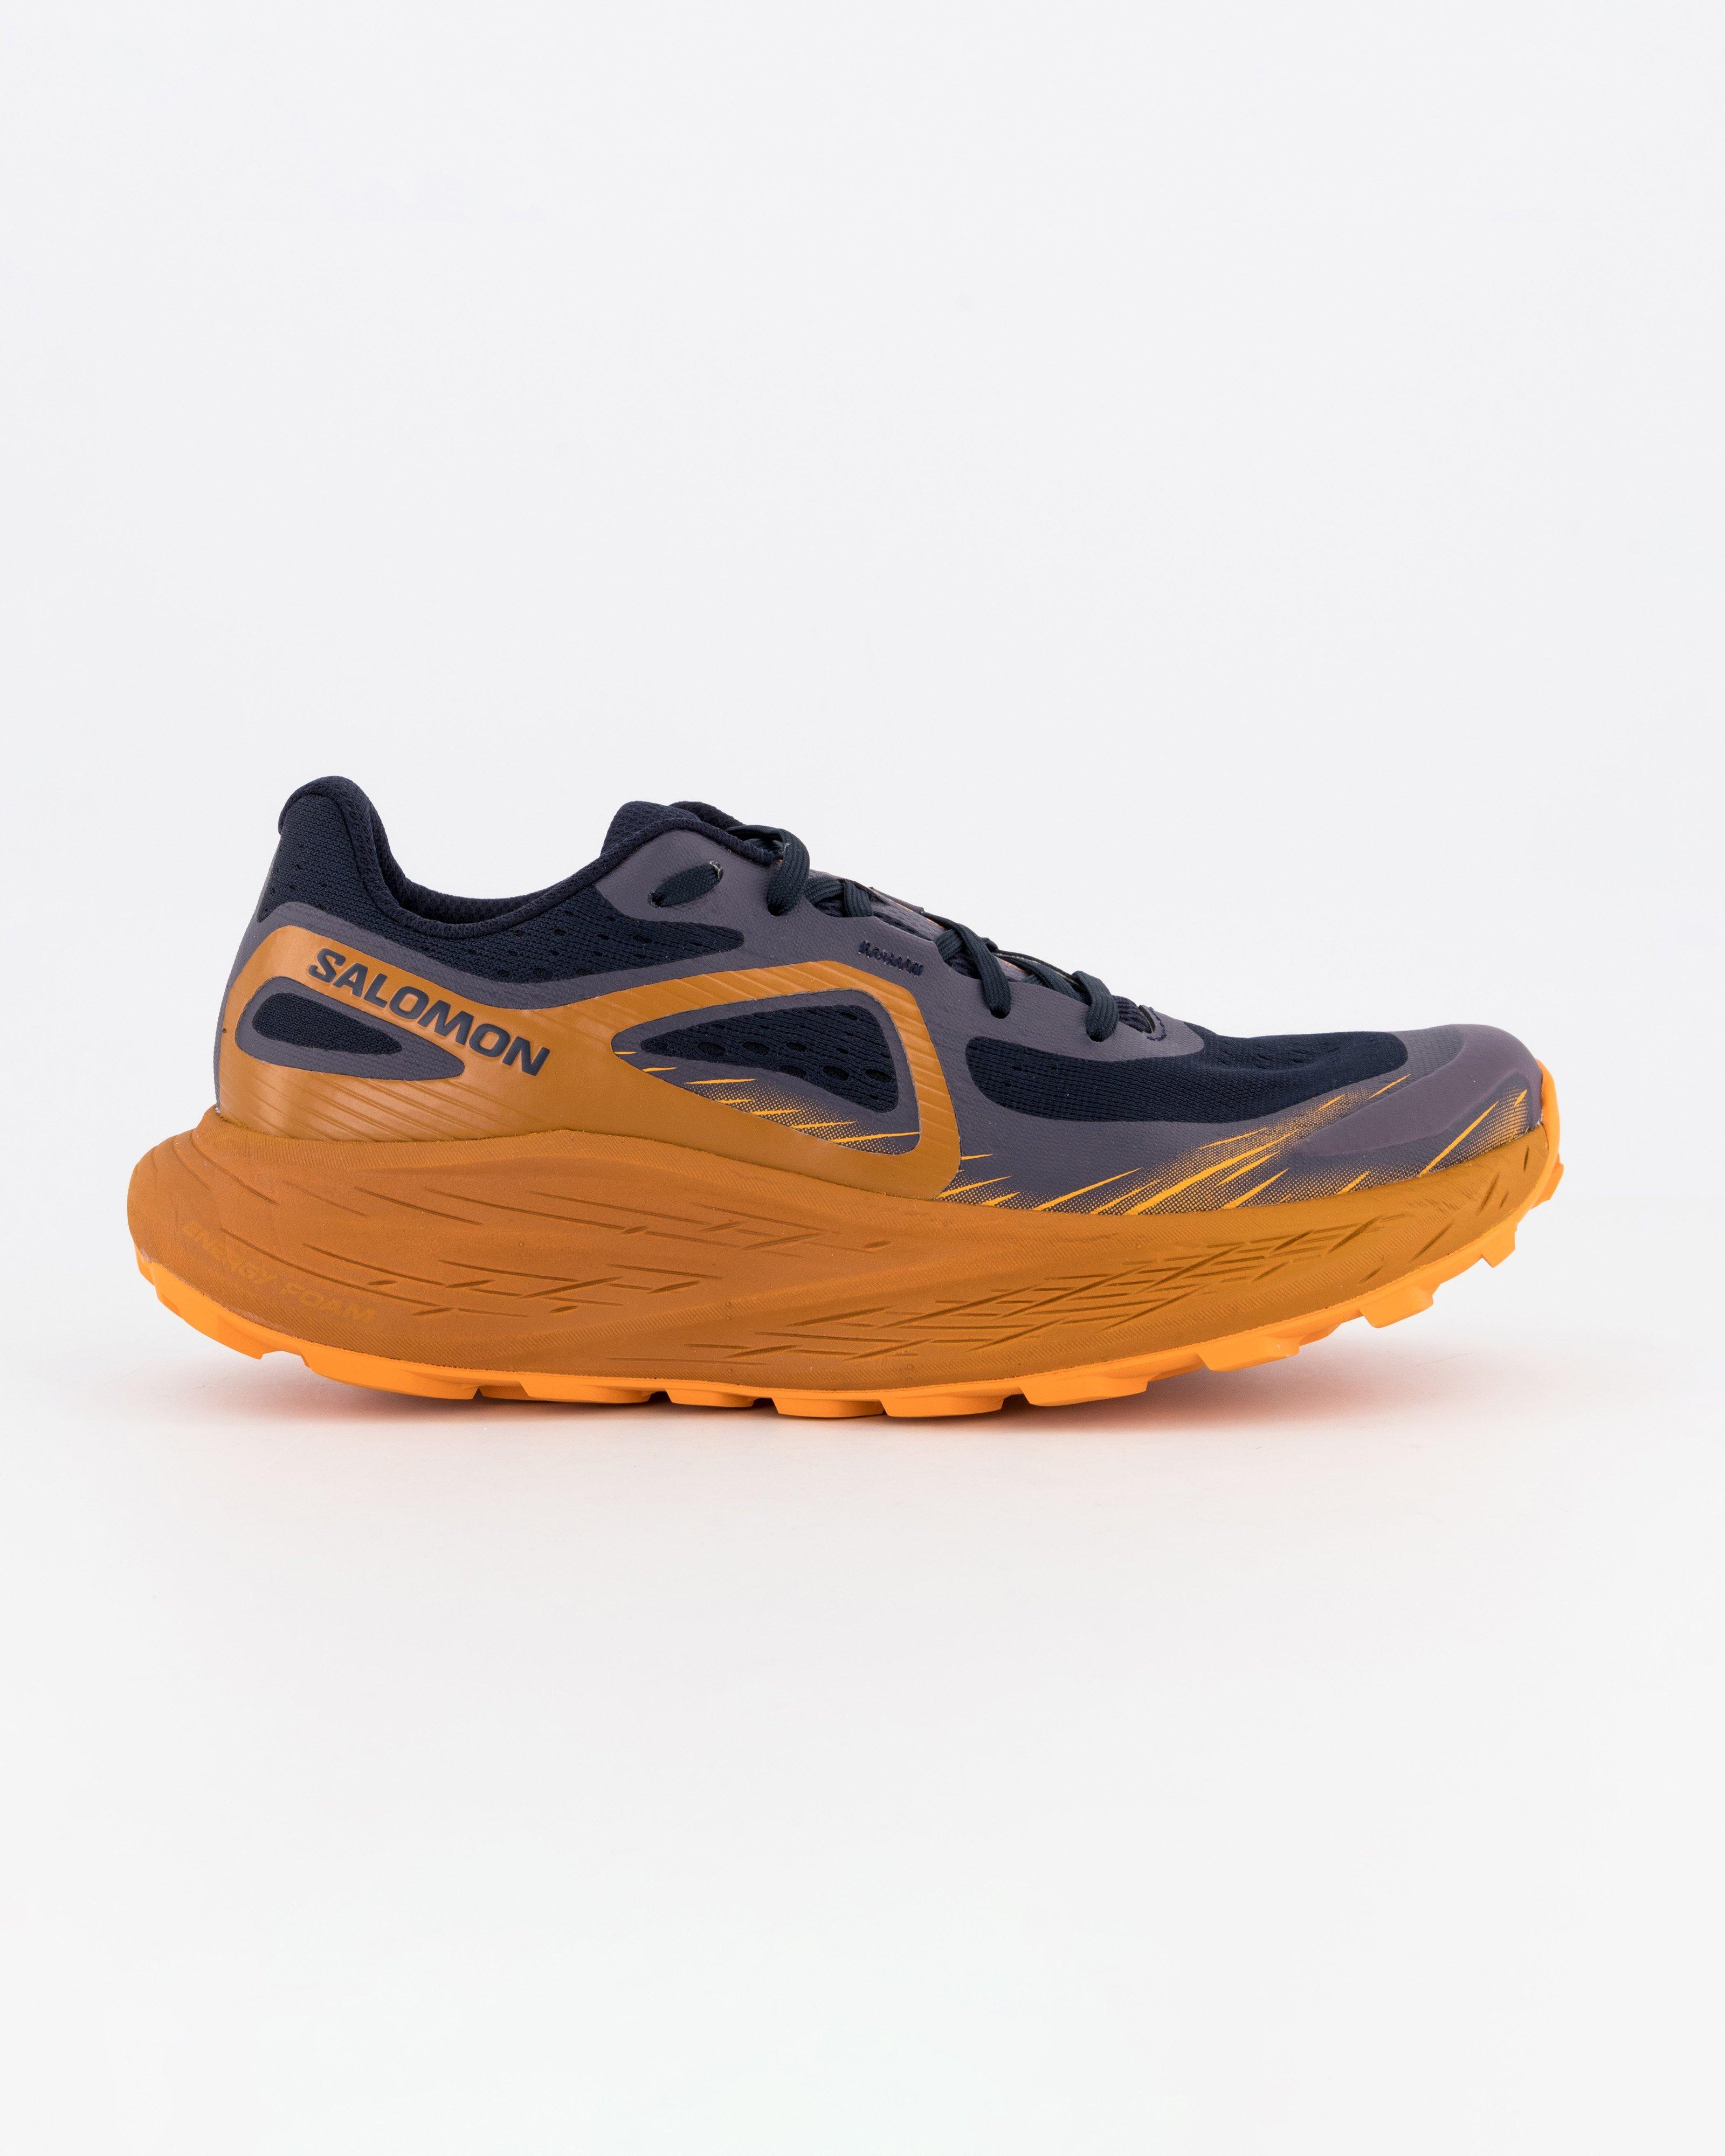 Salomon Men's Glide Max Trail Running Shoes -  Blue